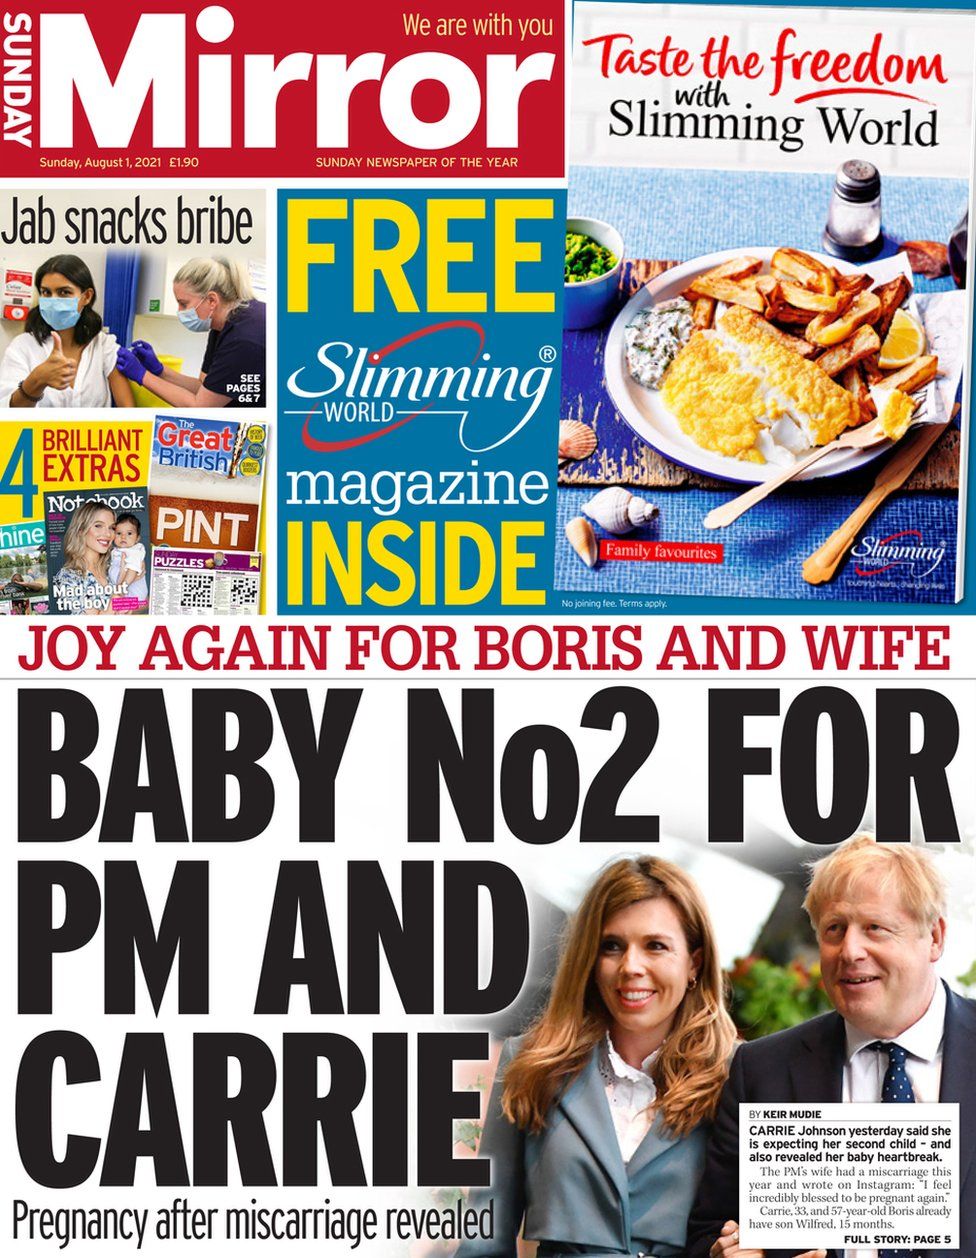 The Sunday Mirror 1 августа